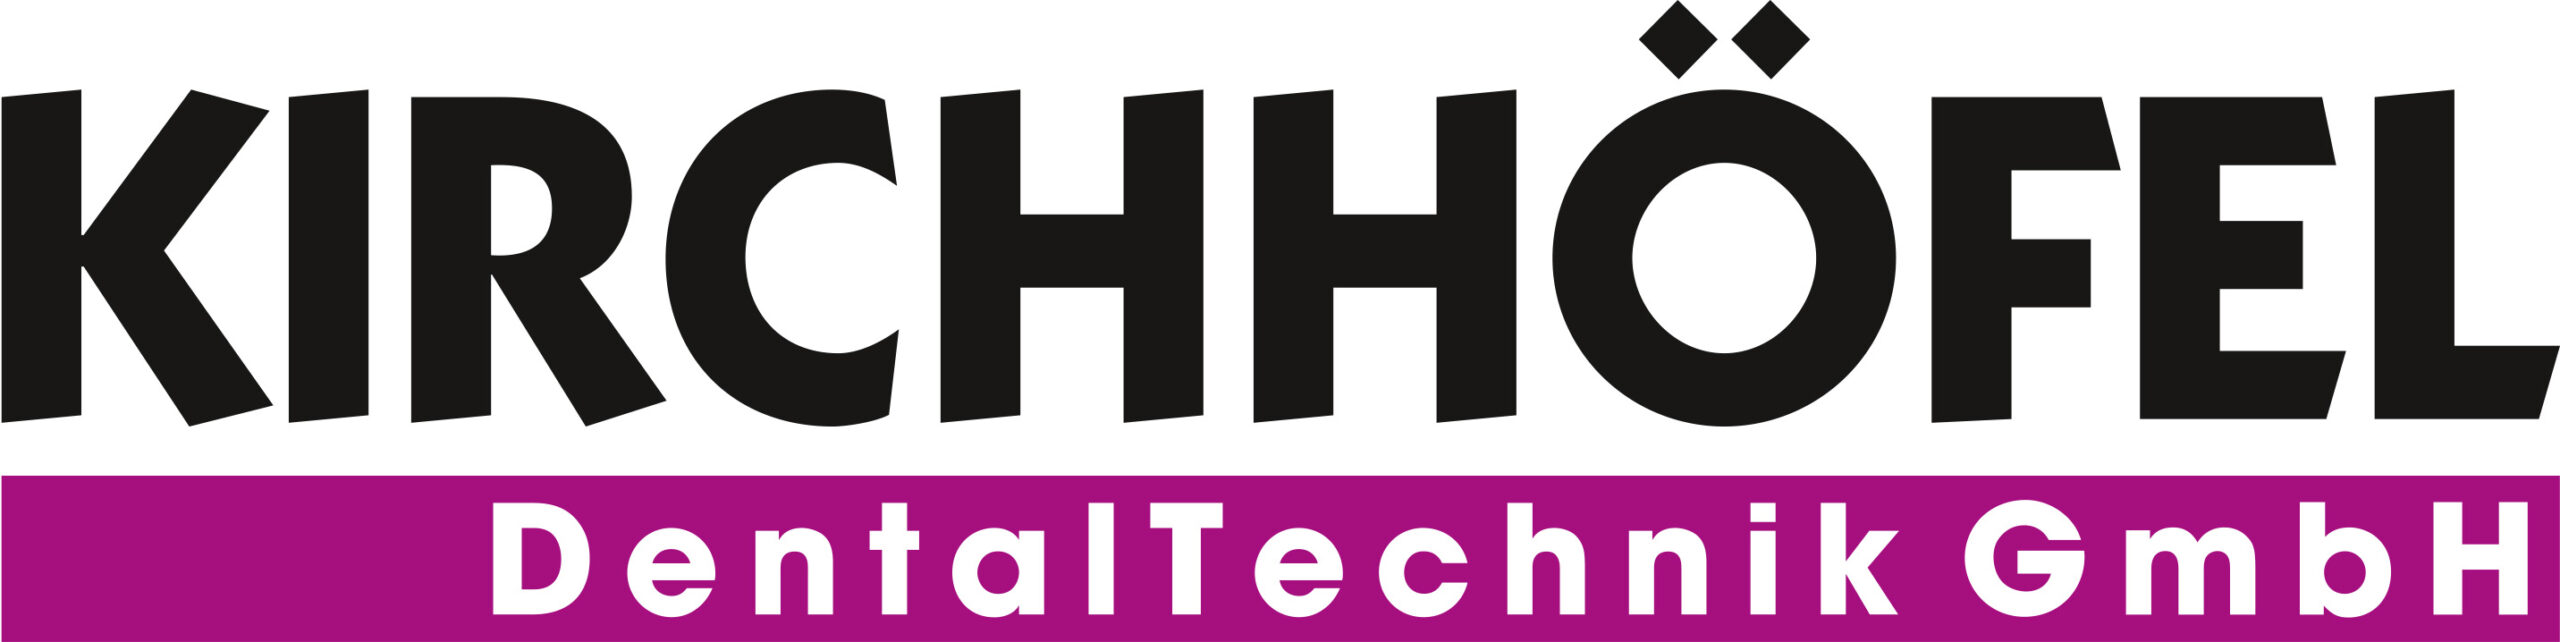 DL_KirchhoefelGmbH_Logo_4C